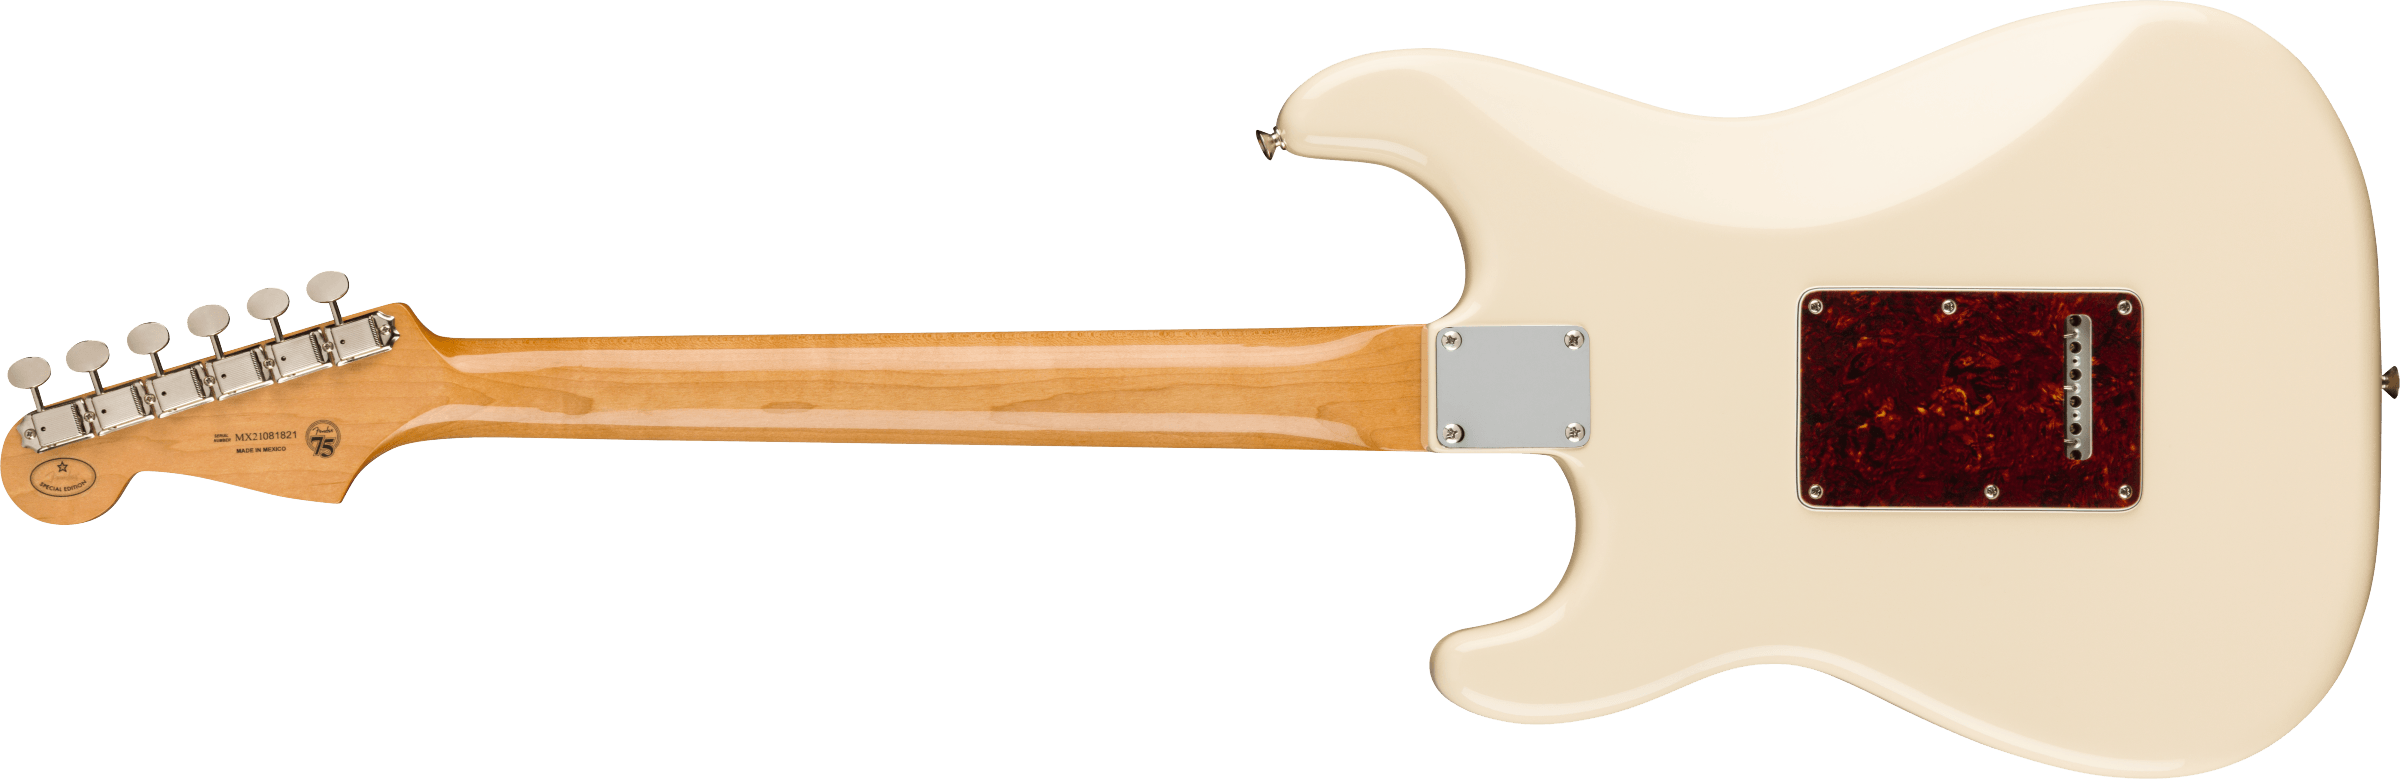 Fender Strat 60s Vintera Ltd Mex Pf - Olympic White - Guitare Électrique Forme Str - Variation 1